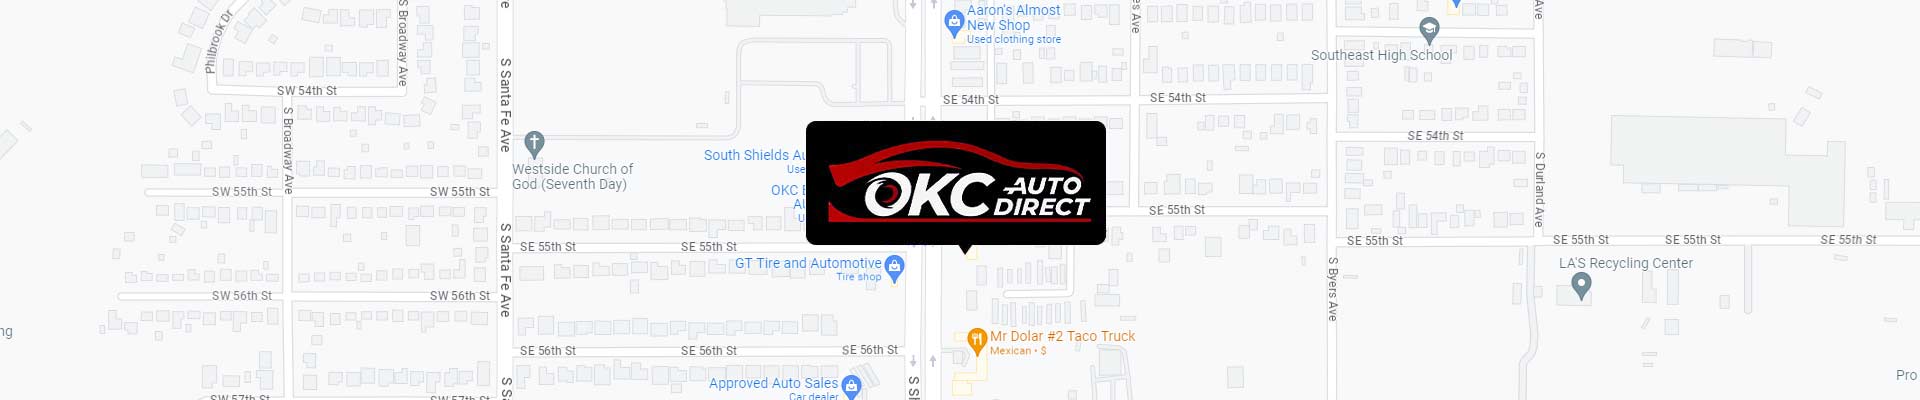 OKC Auto Direct